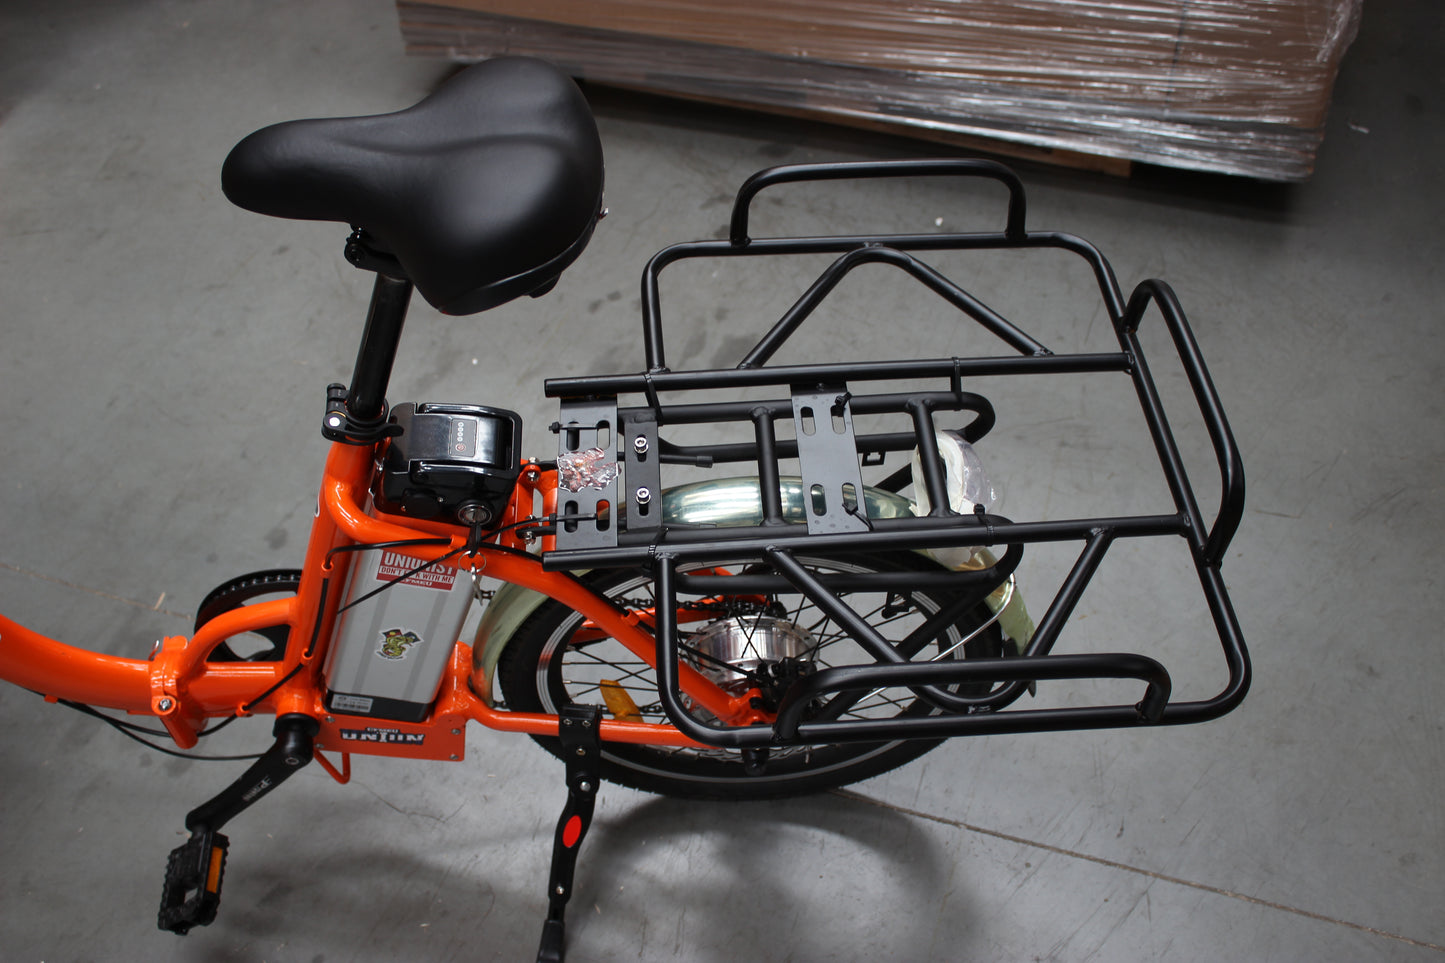 TDR 250W 20" Folding Electric Bike eBike Throttle Pedal Assist with Phone Holder for DoorDash Easi Deliveroo HungryPanda Fantuan